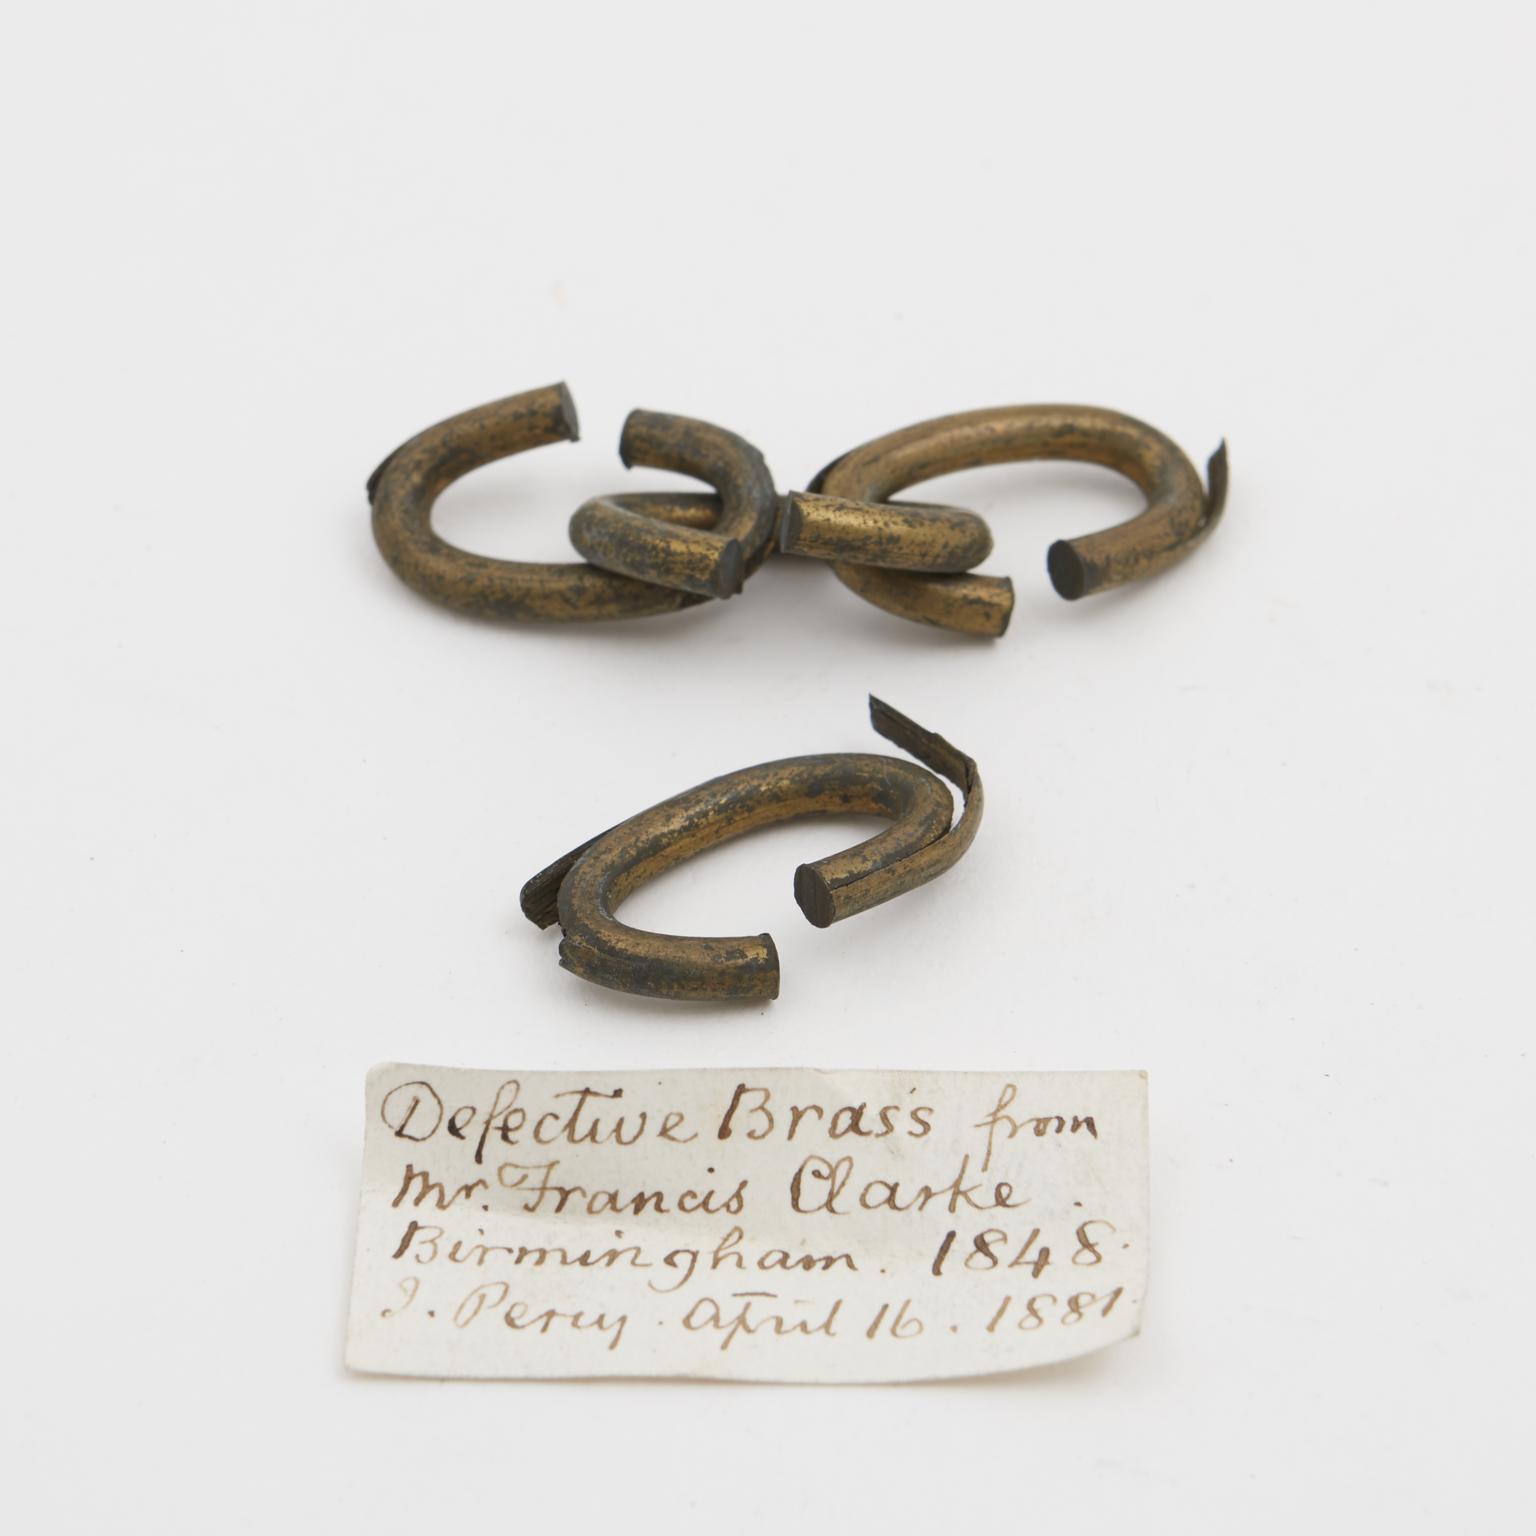 Defective brass. Splits on bending into rings (specimen)